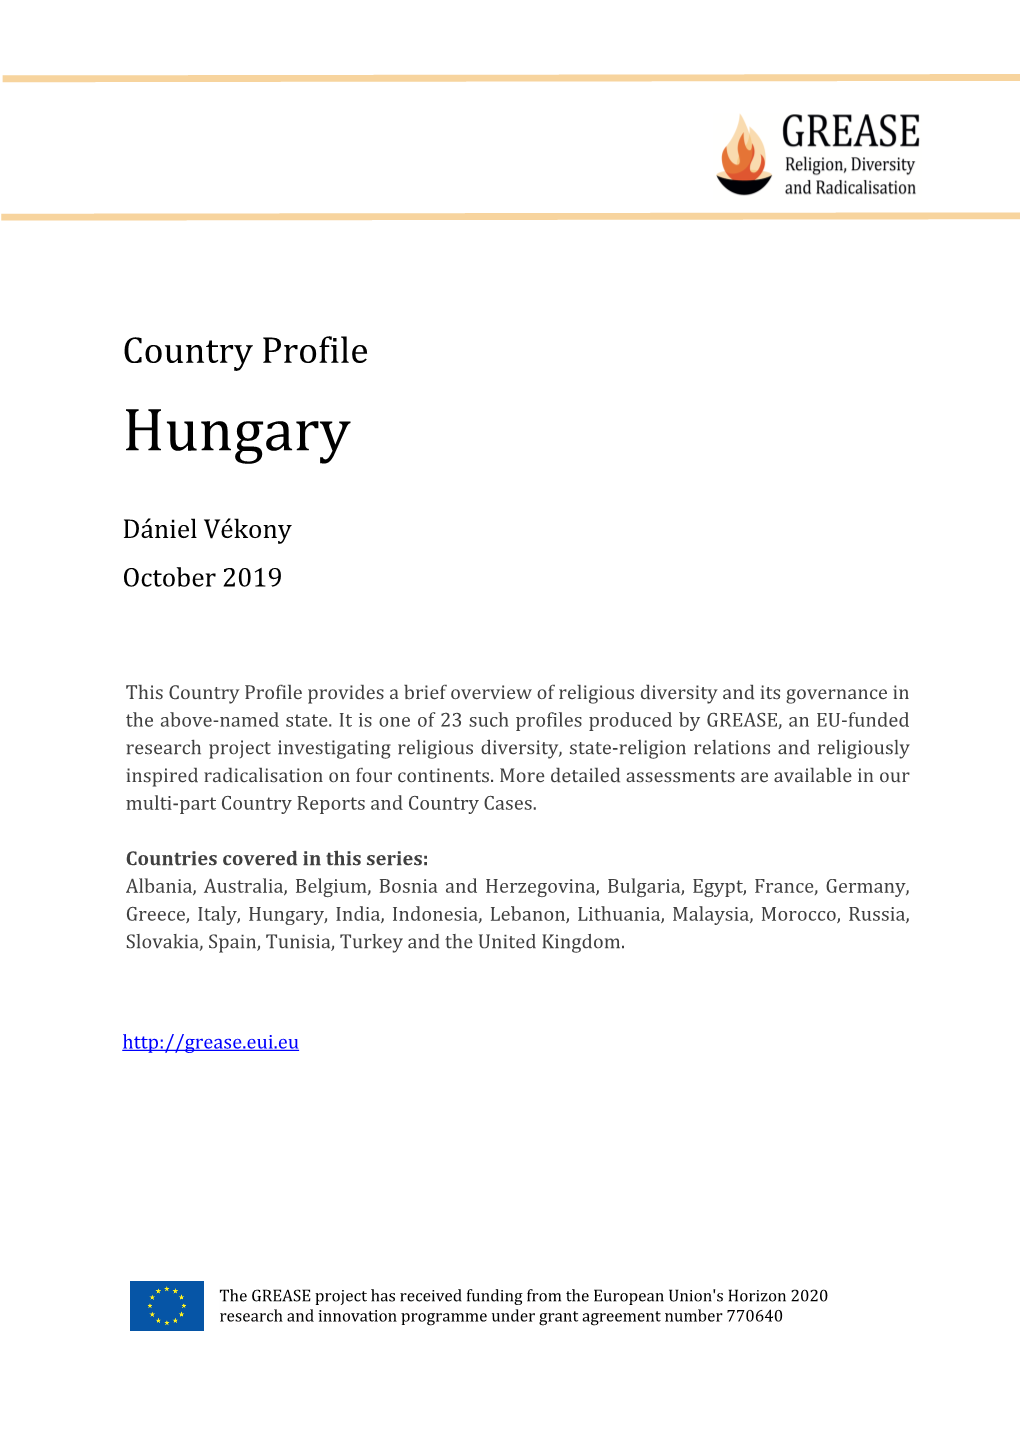 Hungary Profile